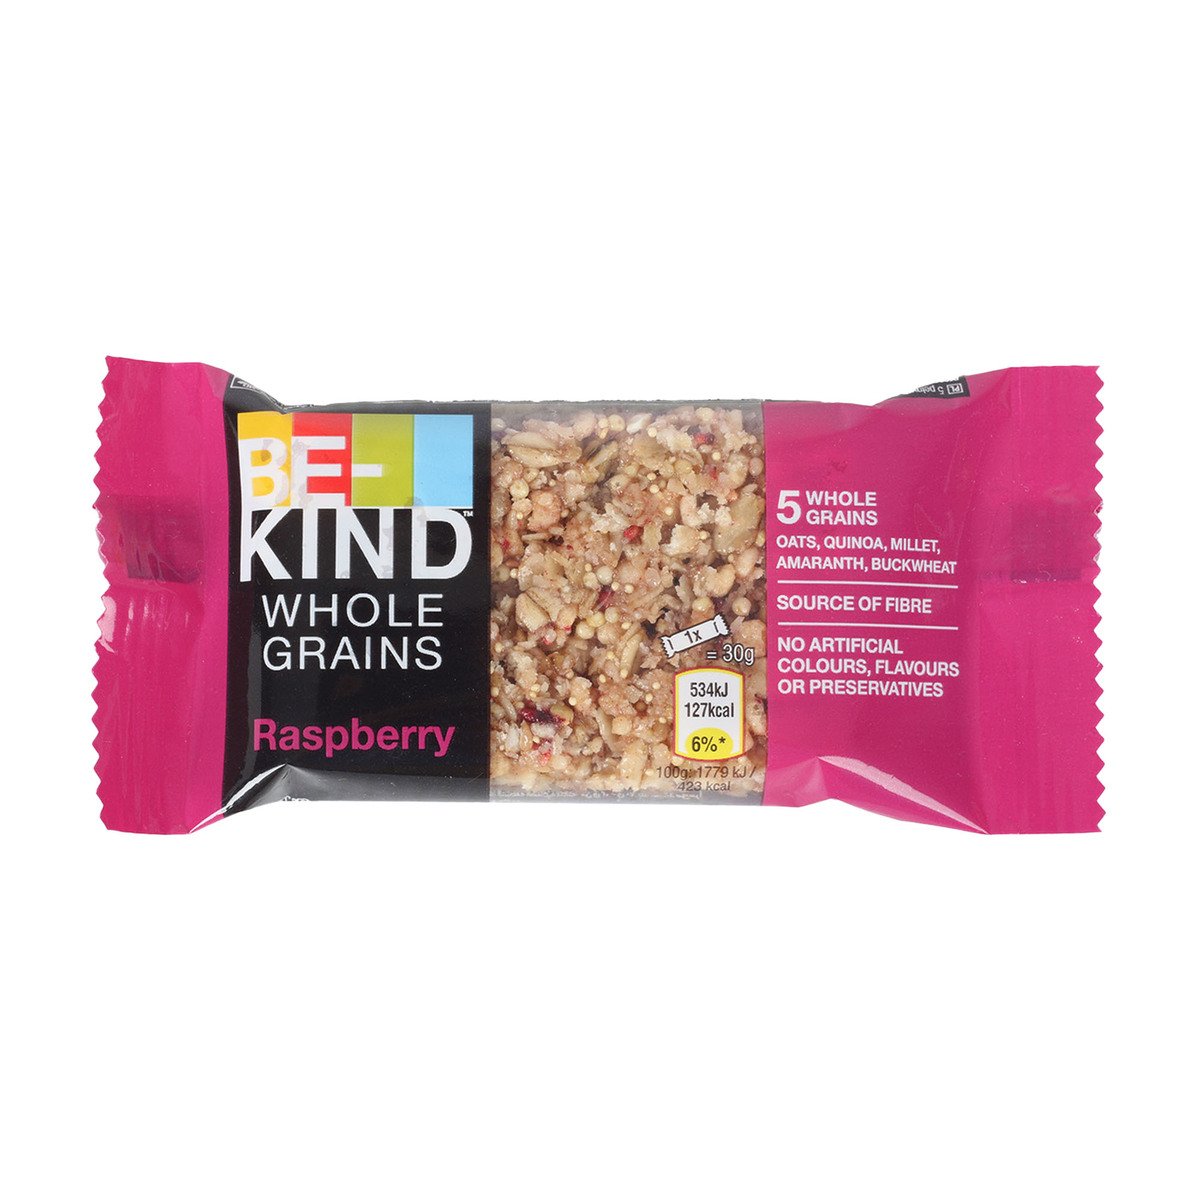 Be-Kind Whole Grains Raspberry Bar 30 g